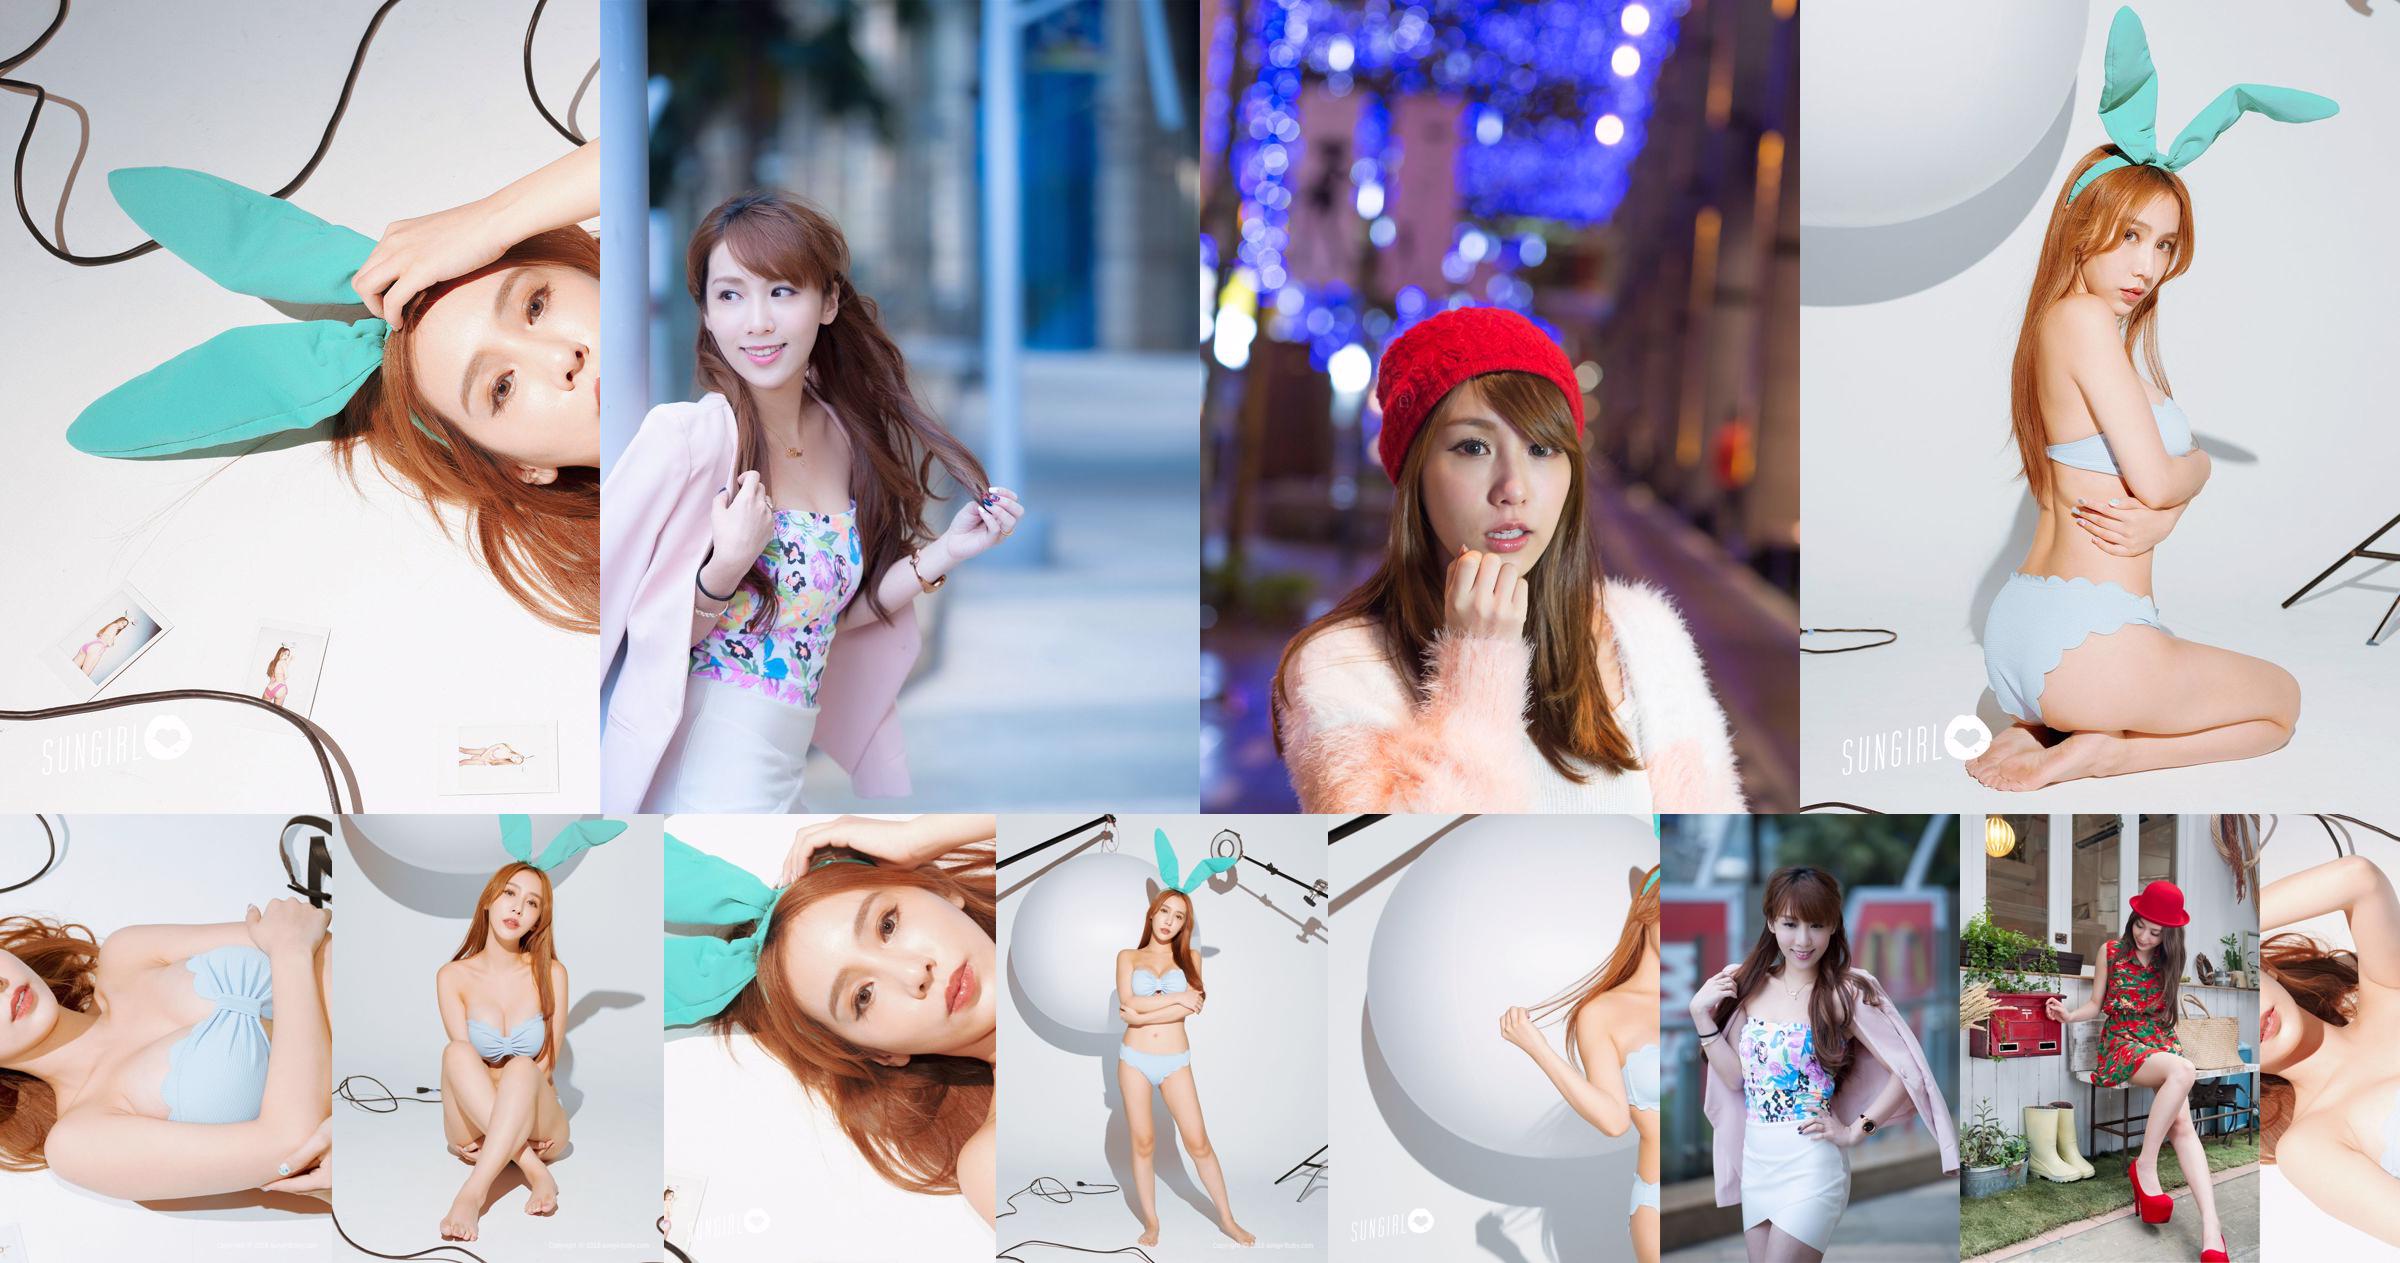 [Taiwan Red Beauty] Kimi Step / Lu Siying "Fashion Outdoor" No.15cb4a Pagina 1